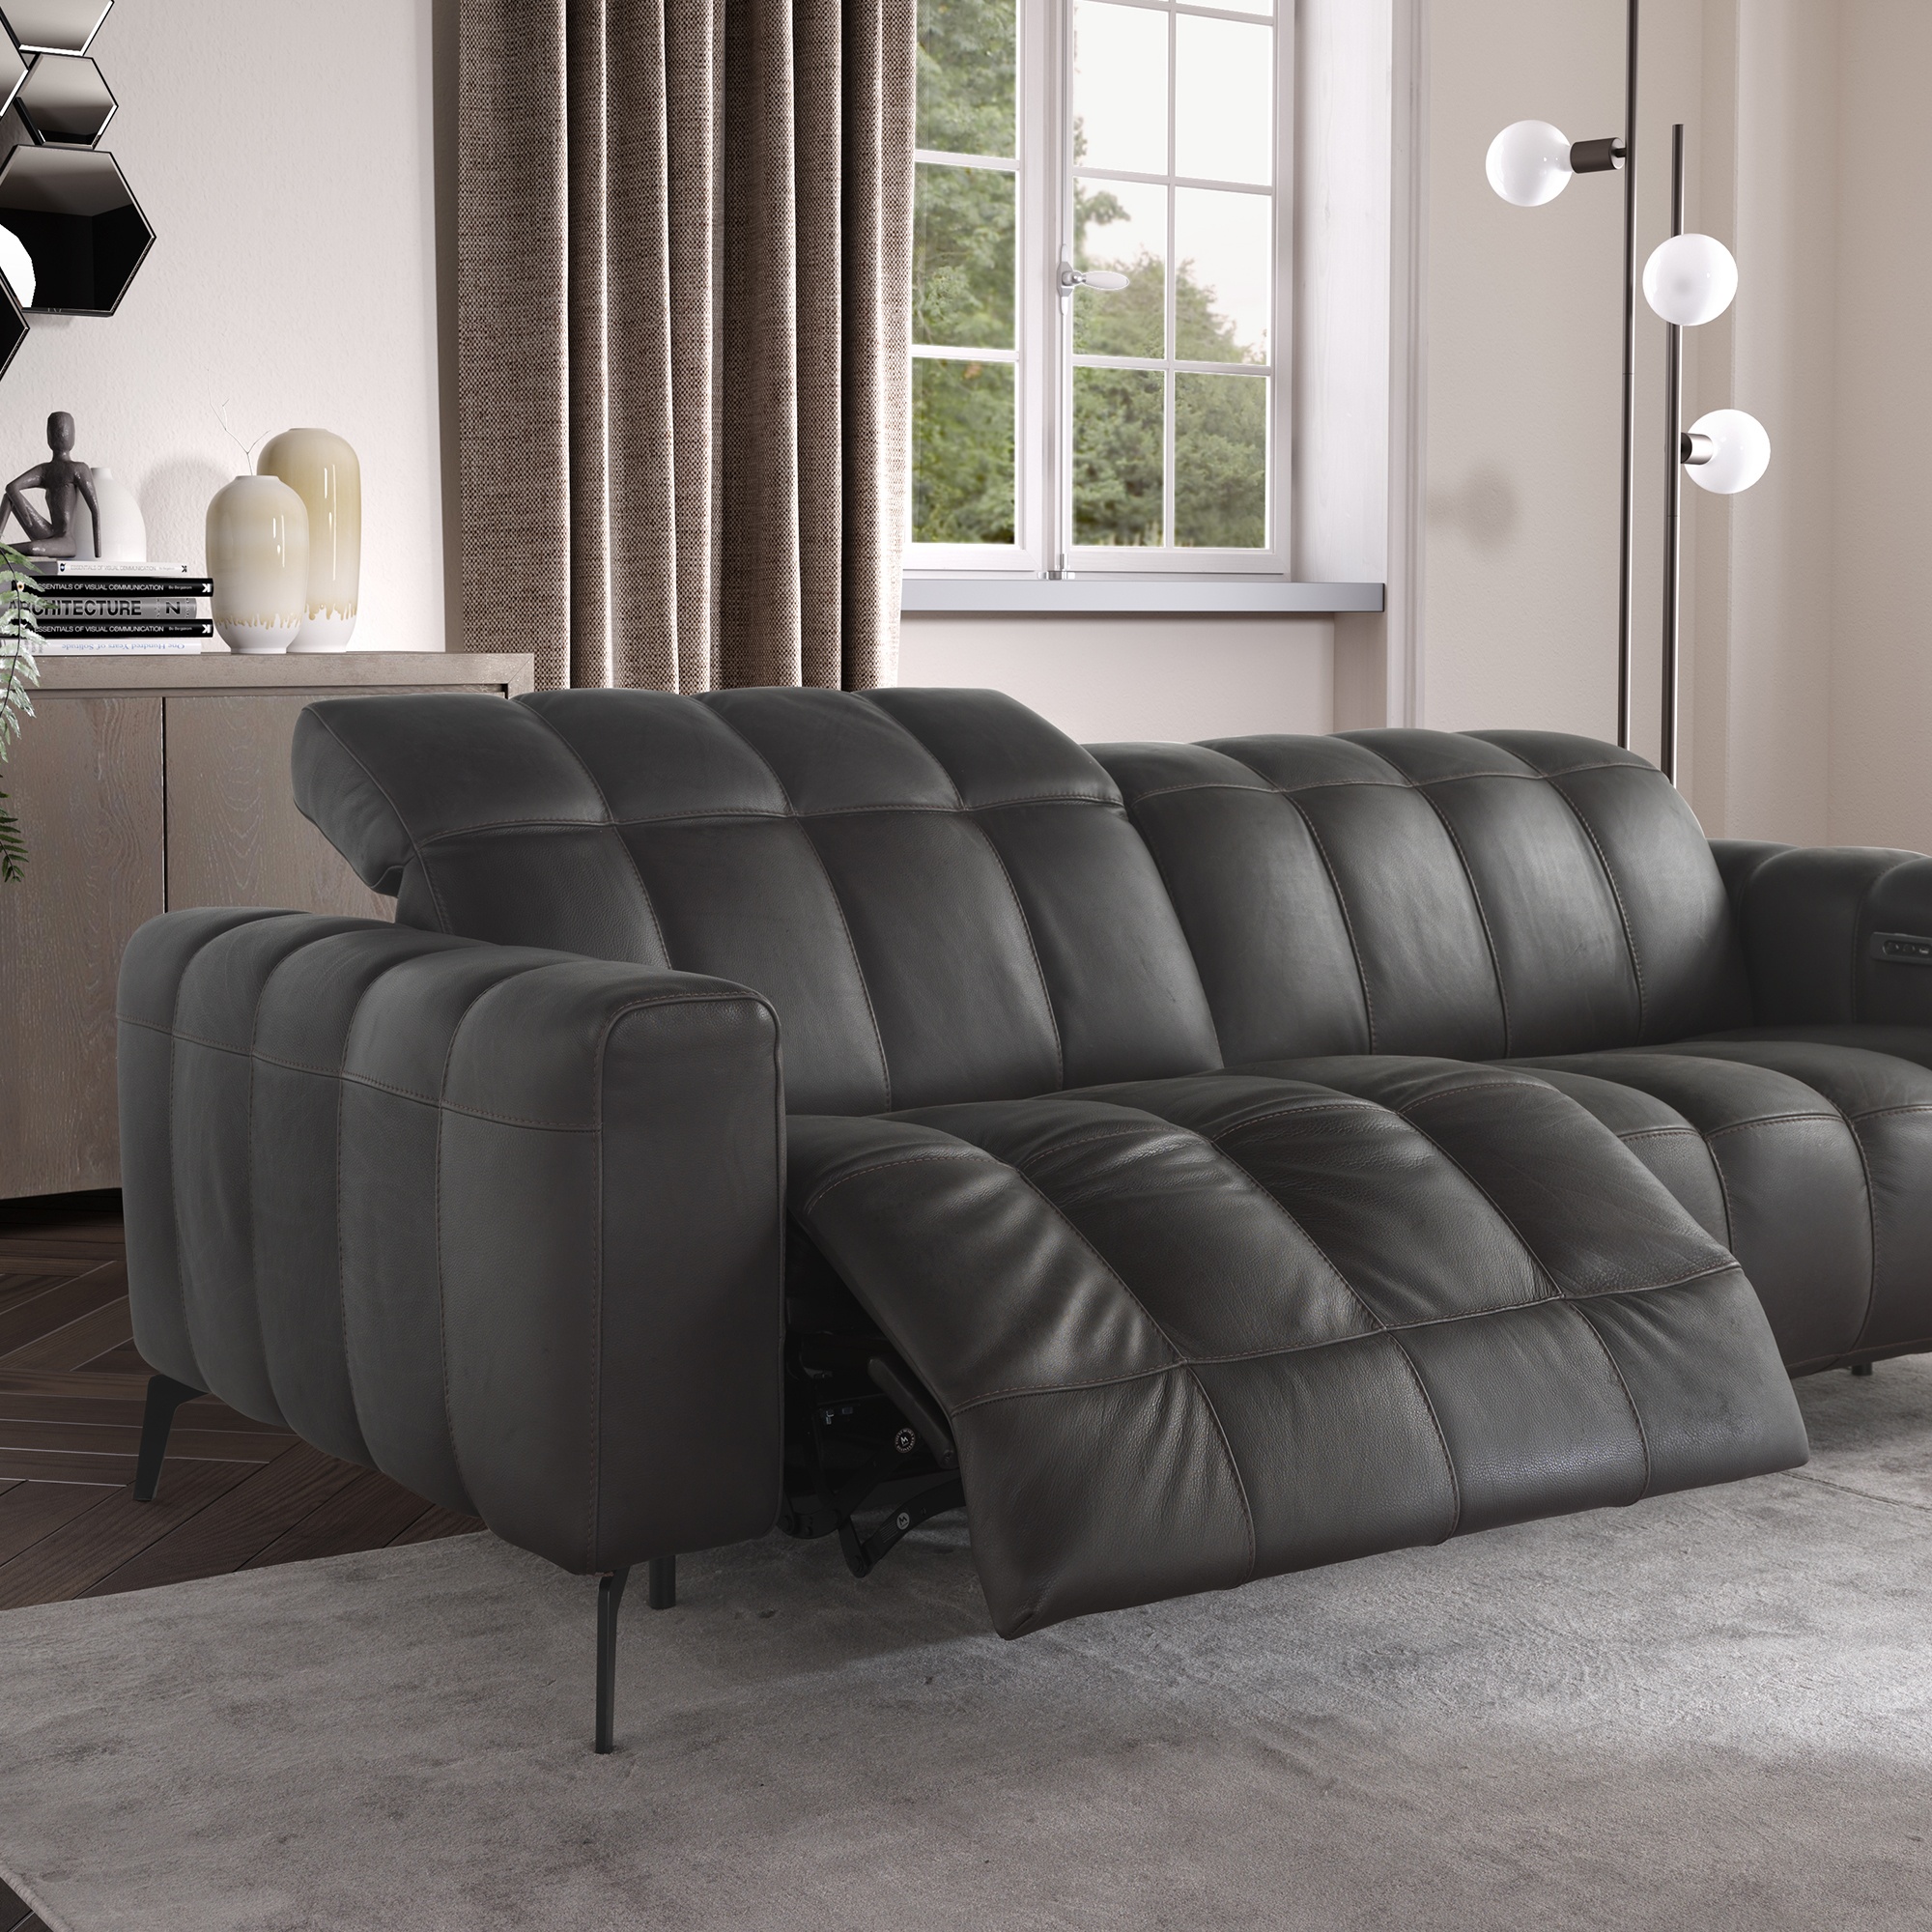 Natuzzi Editions Portento Large Electric Recliner Sofa | All Sofas